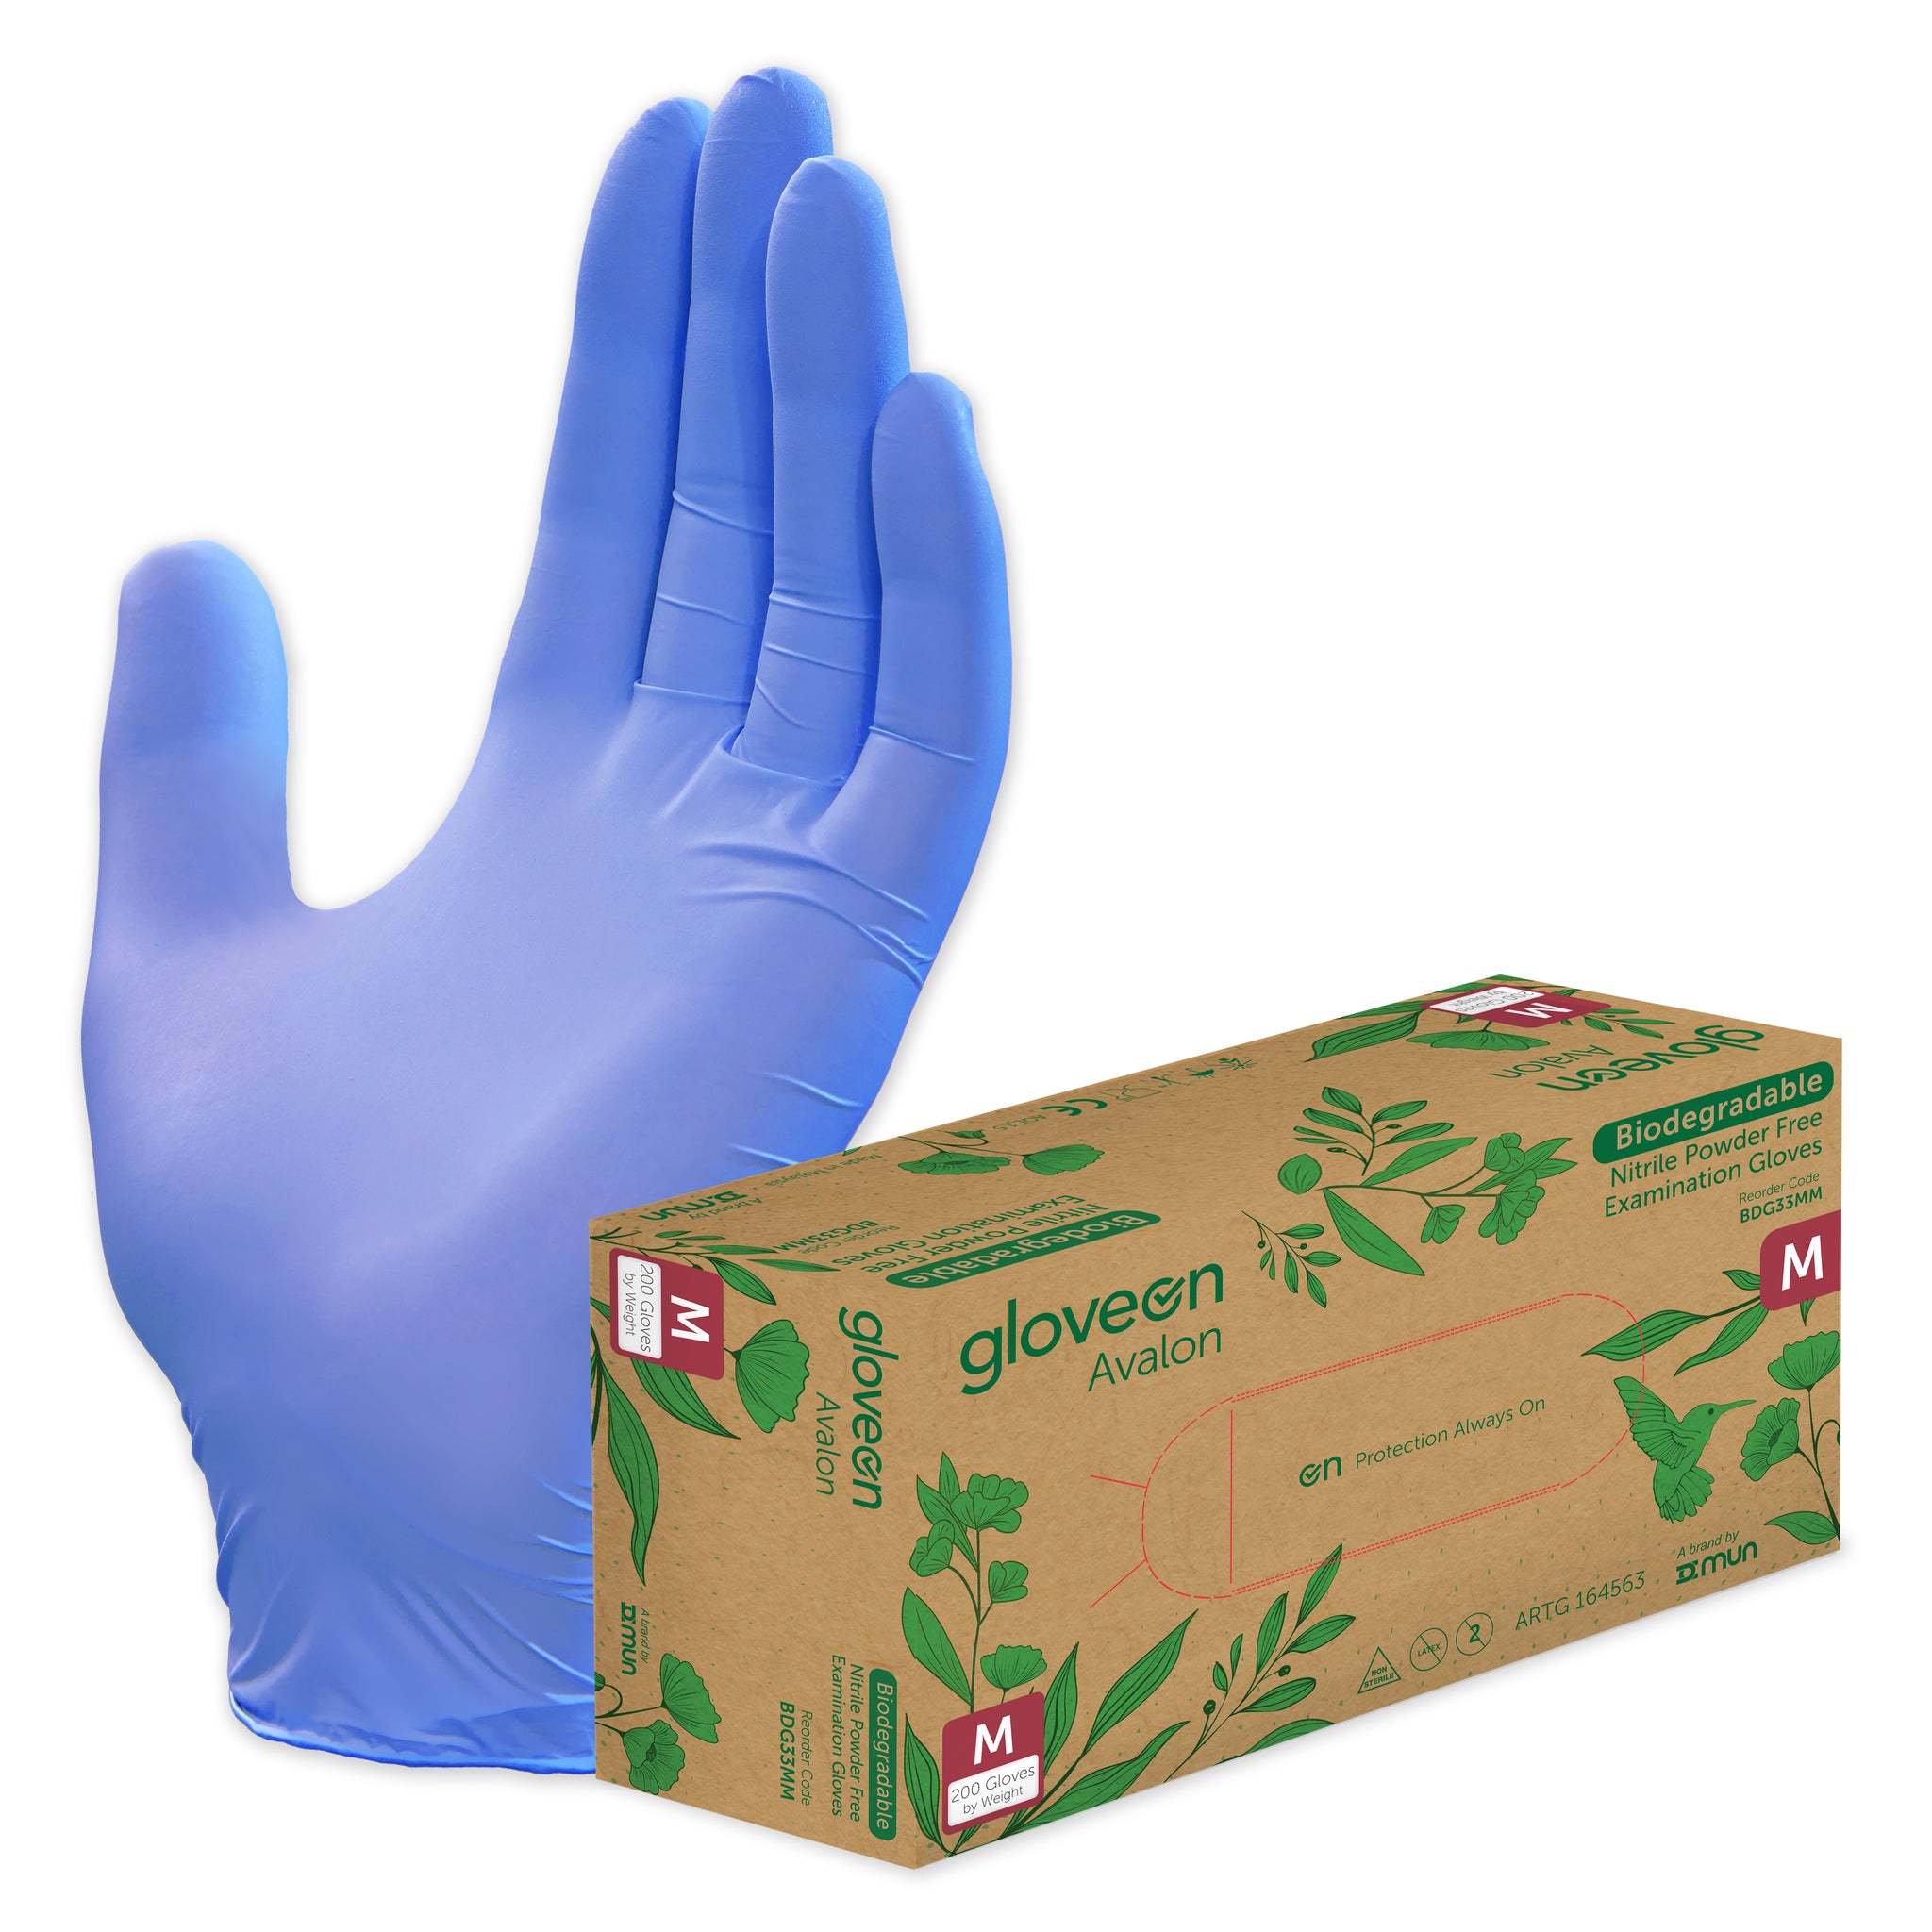 Biodegradable Nitrile Exam Gloves, Powder Free, Non-Sterile, Fingertip Textured, Standard Cuff, Violet Blue - Box of 200, M